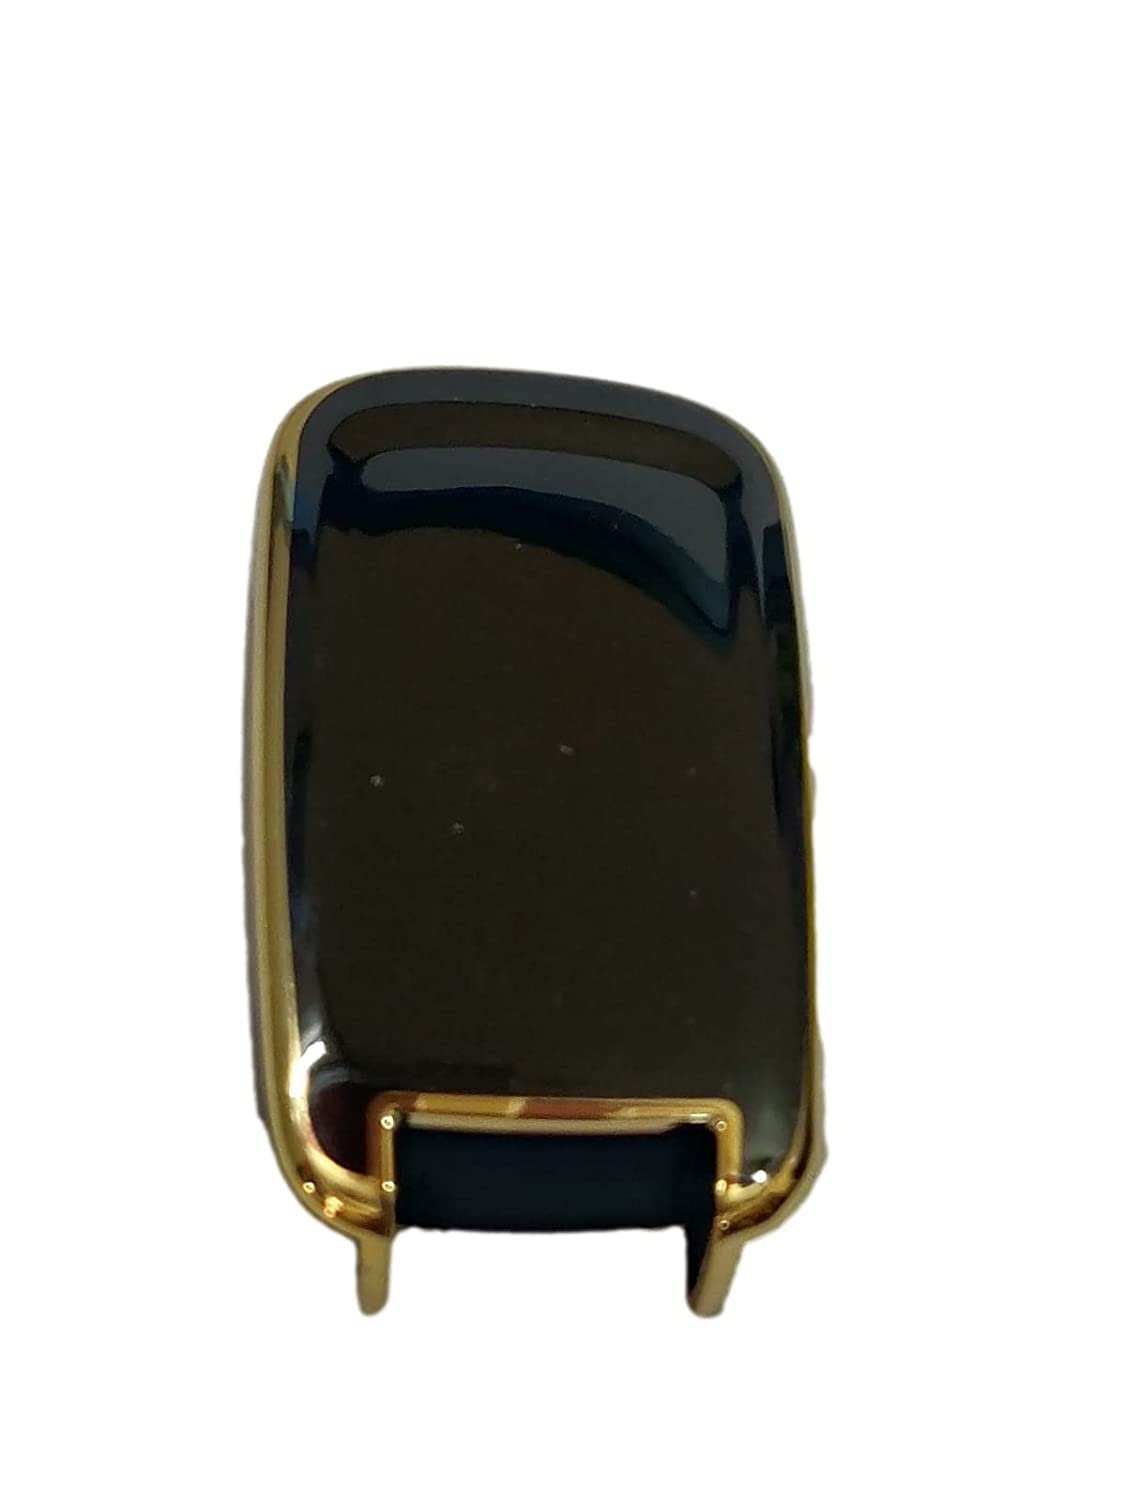 TPU Carbon Fiber Car Key Cover Compatible with Chevrolet Cruze (Black) Image 